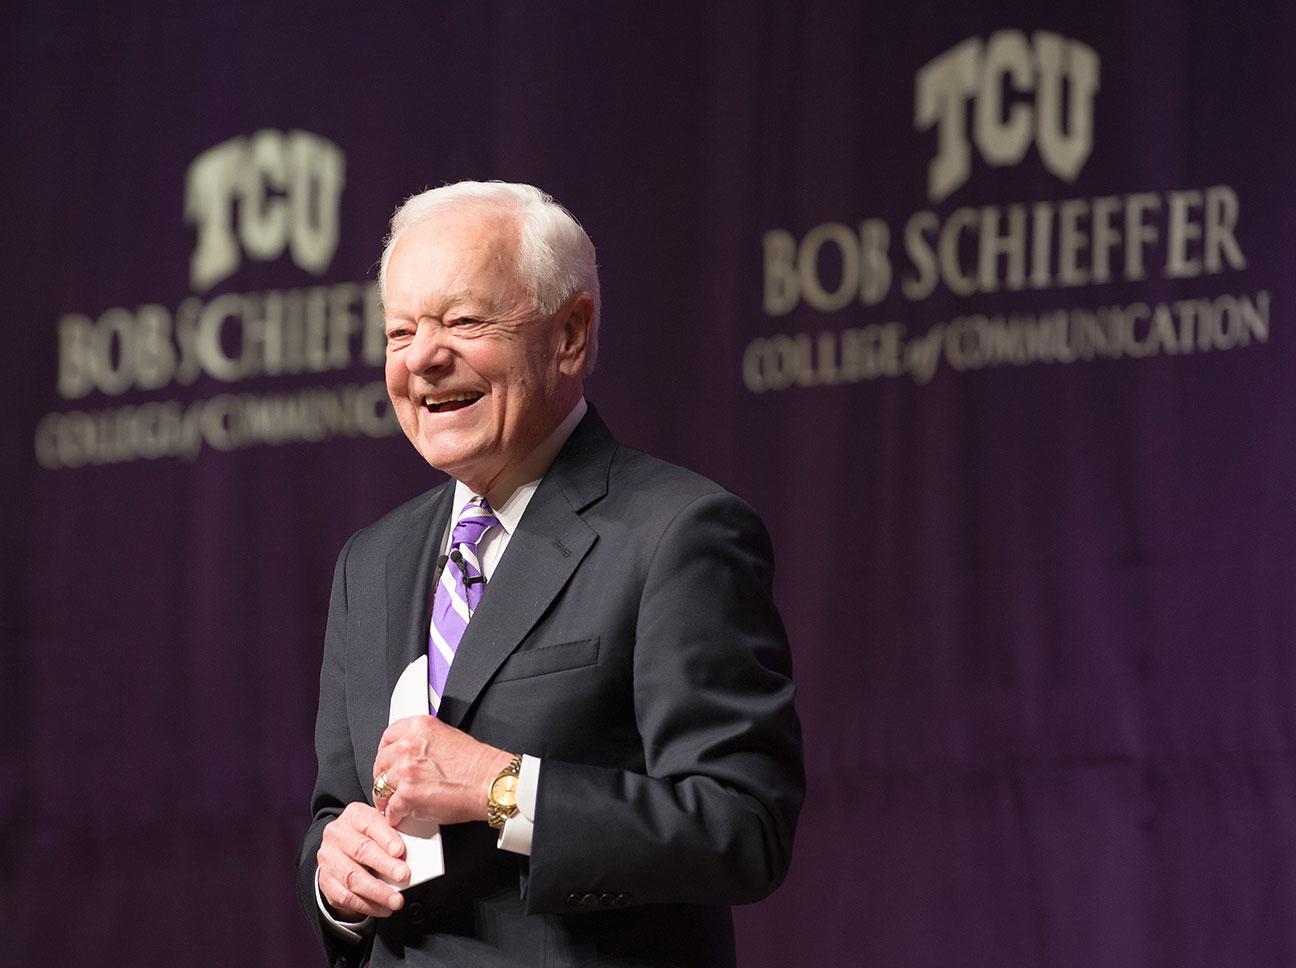 Bob Schieffer is the namesake for TCU's Bob Schieffer's College of Communication. Photo by Glen E. Ellman